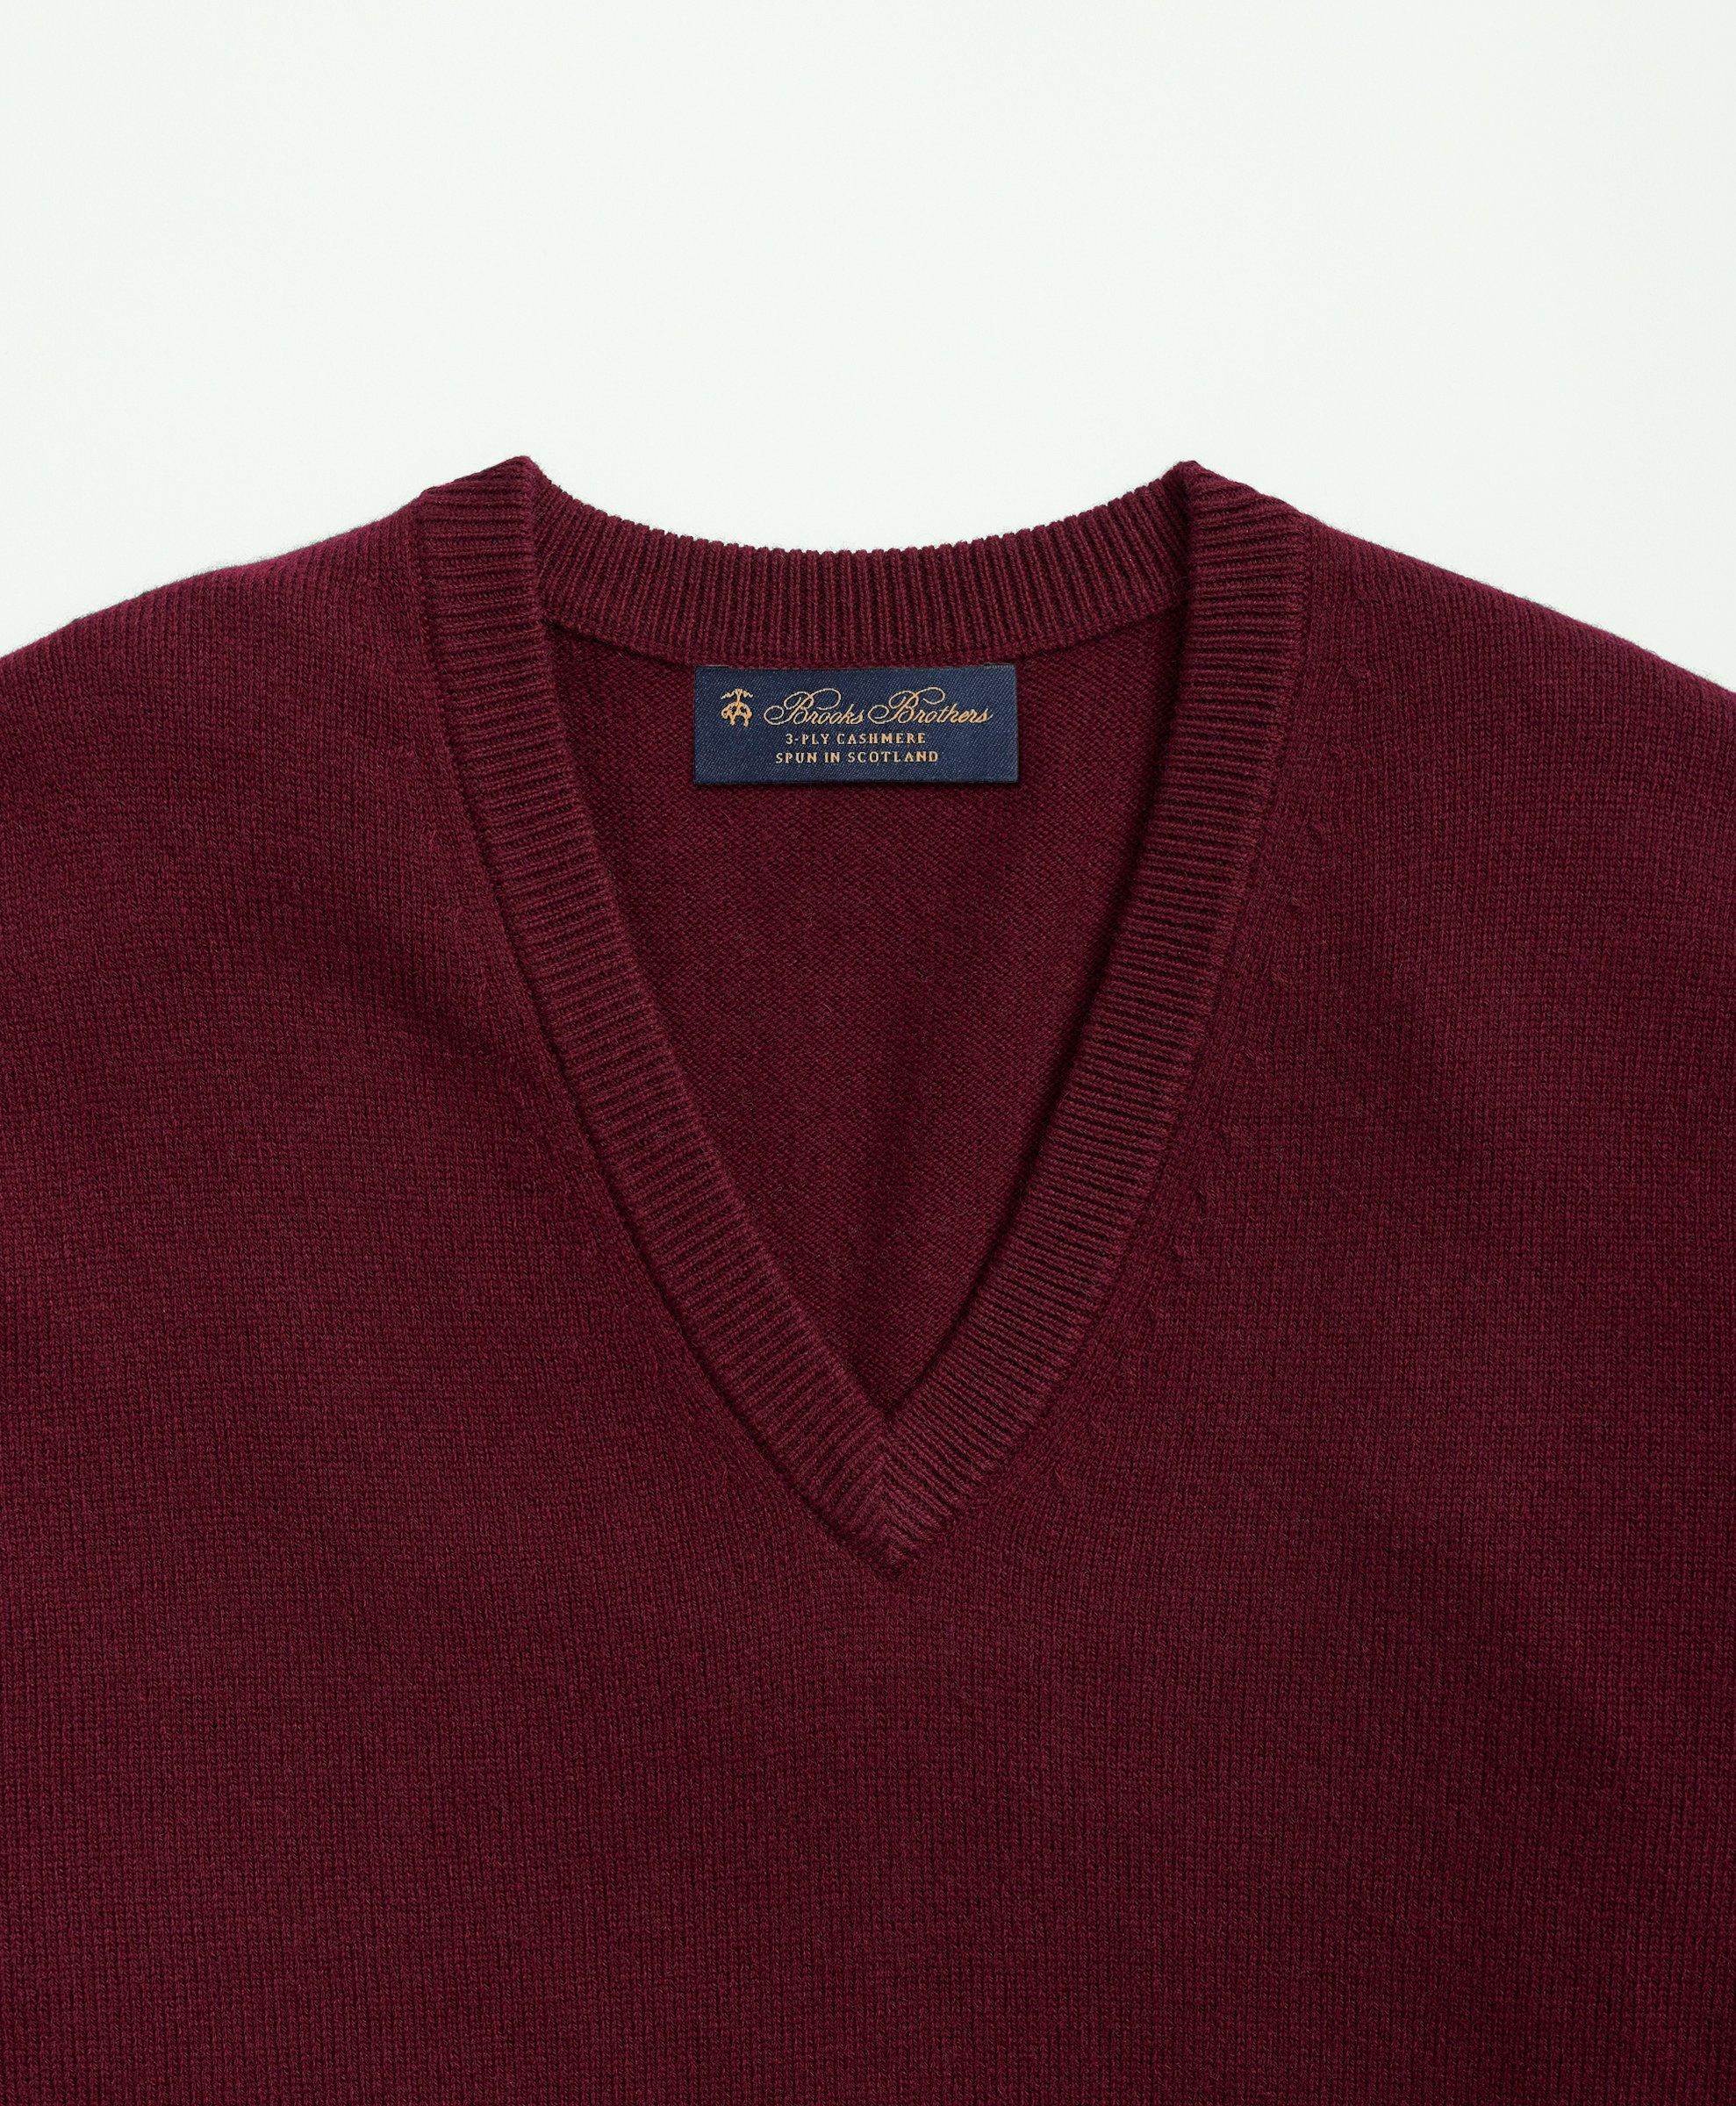 Shop Men's Sweaters: Crew, V-Neck & Cardigan | Brooks Brothers